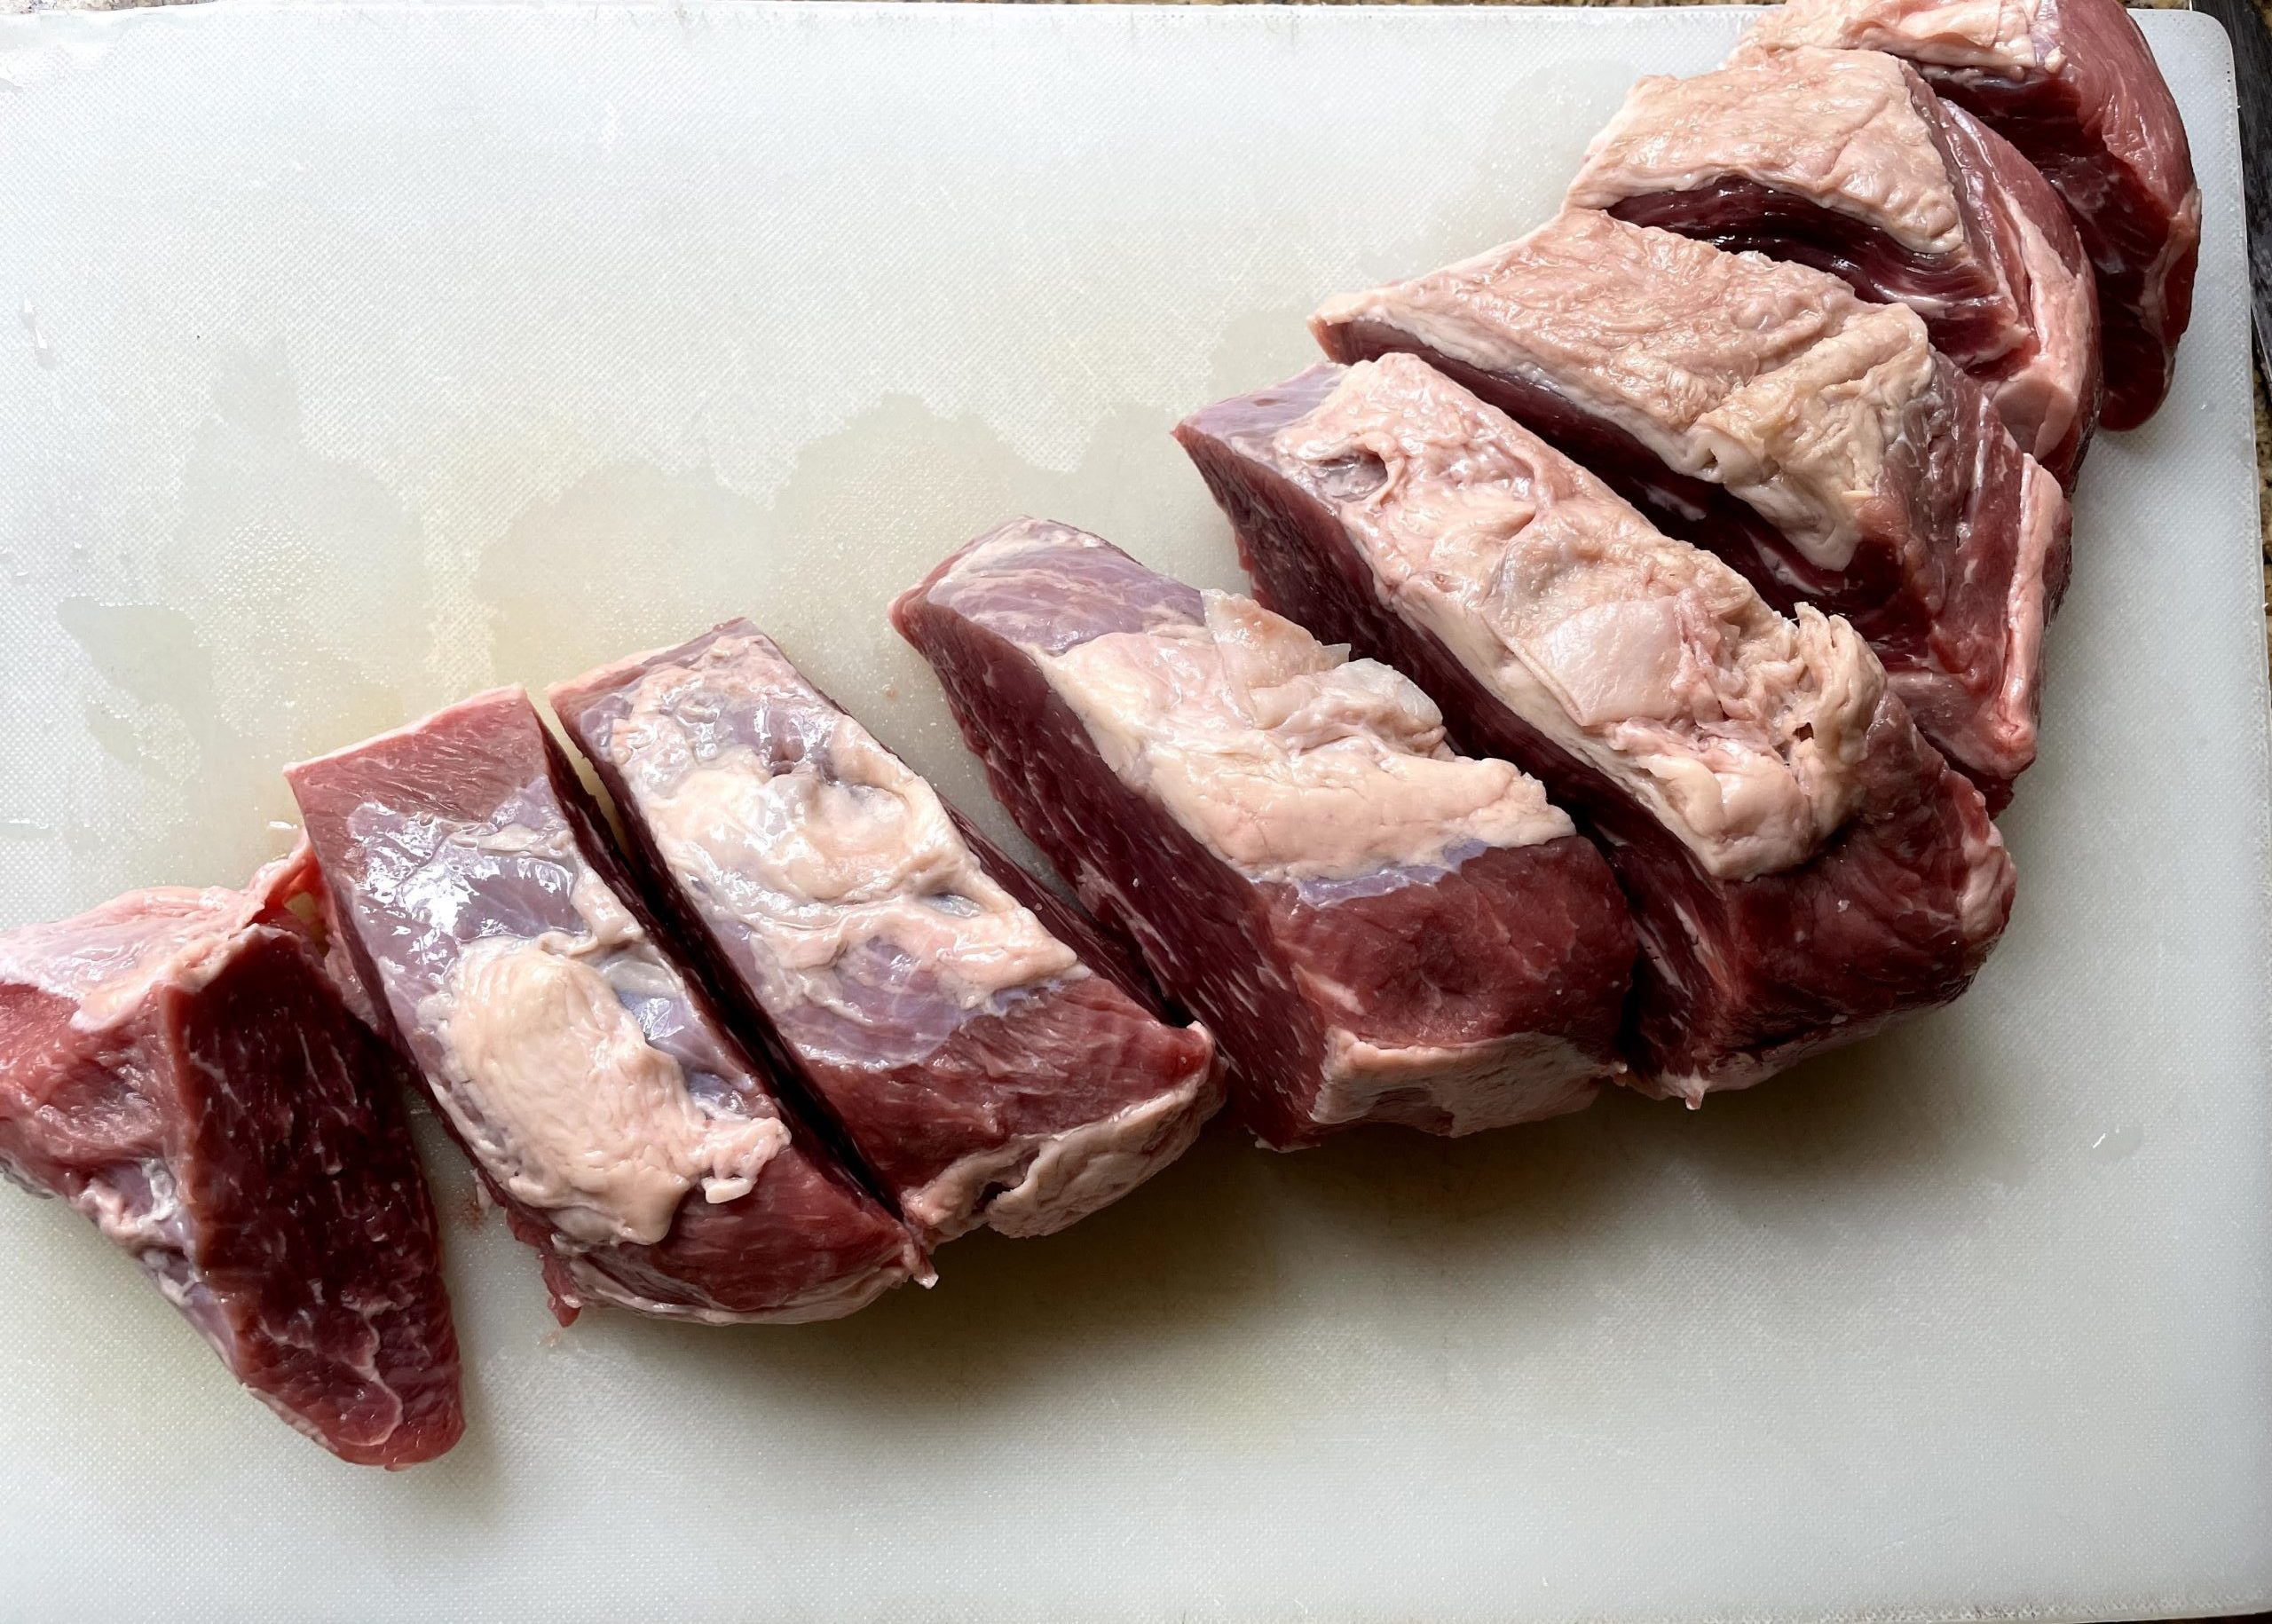 Tri-tip roast cut into steaks